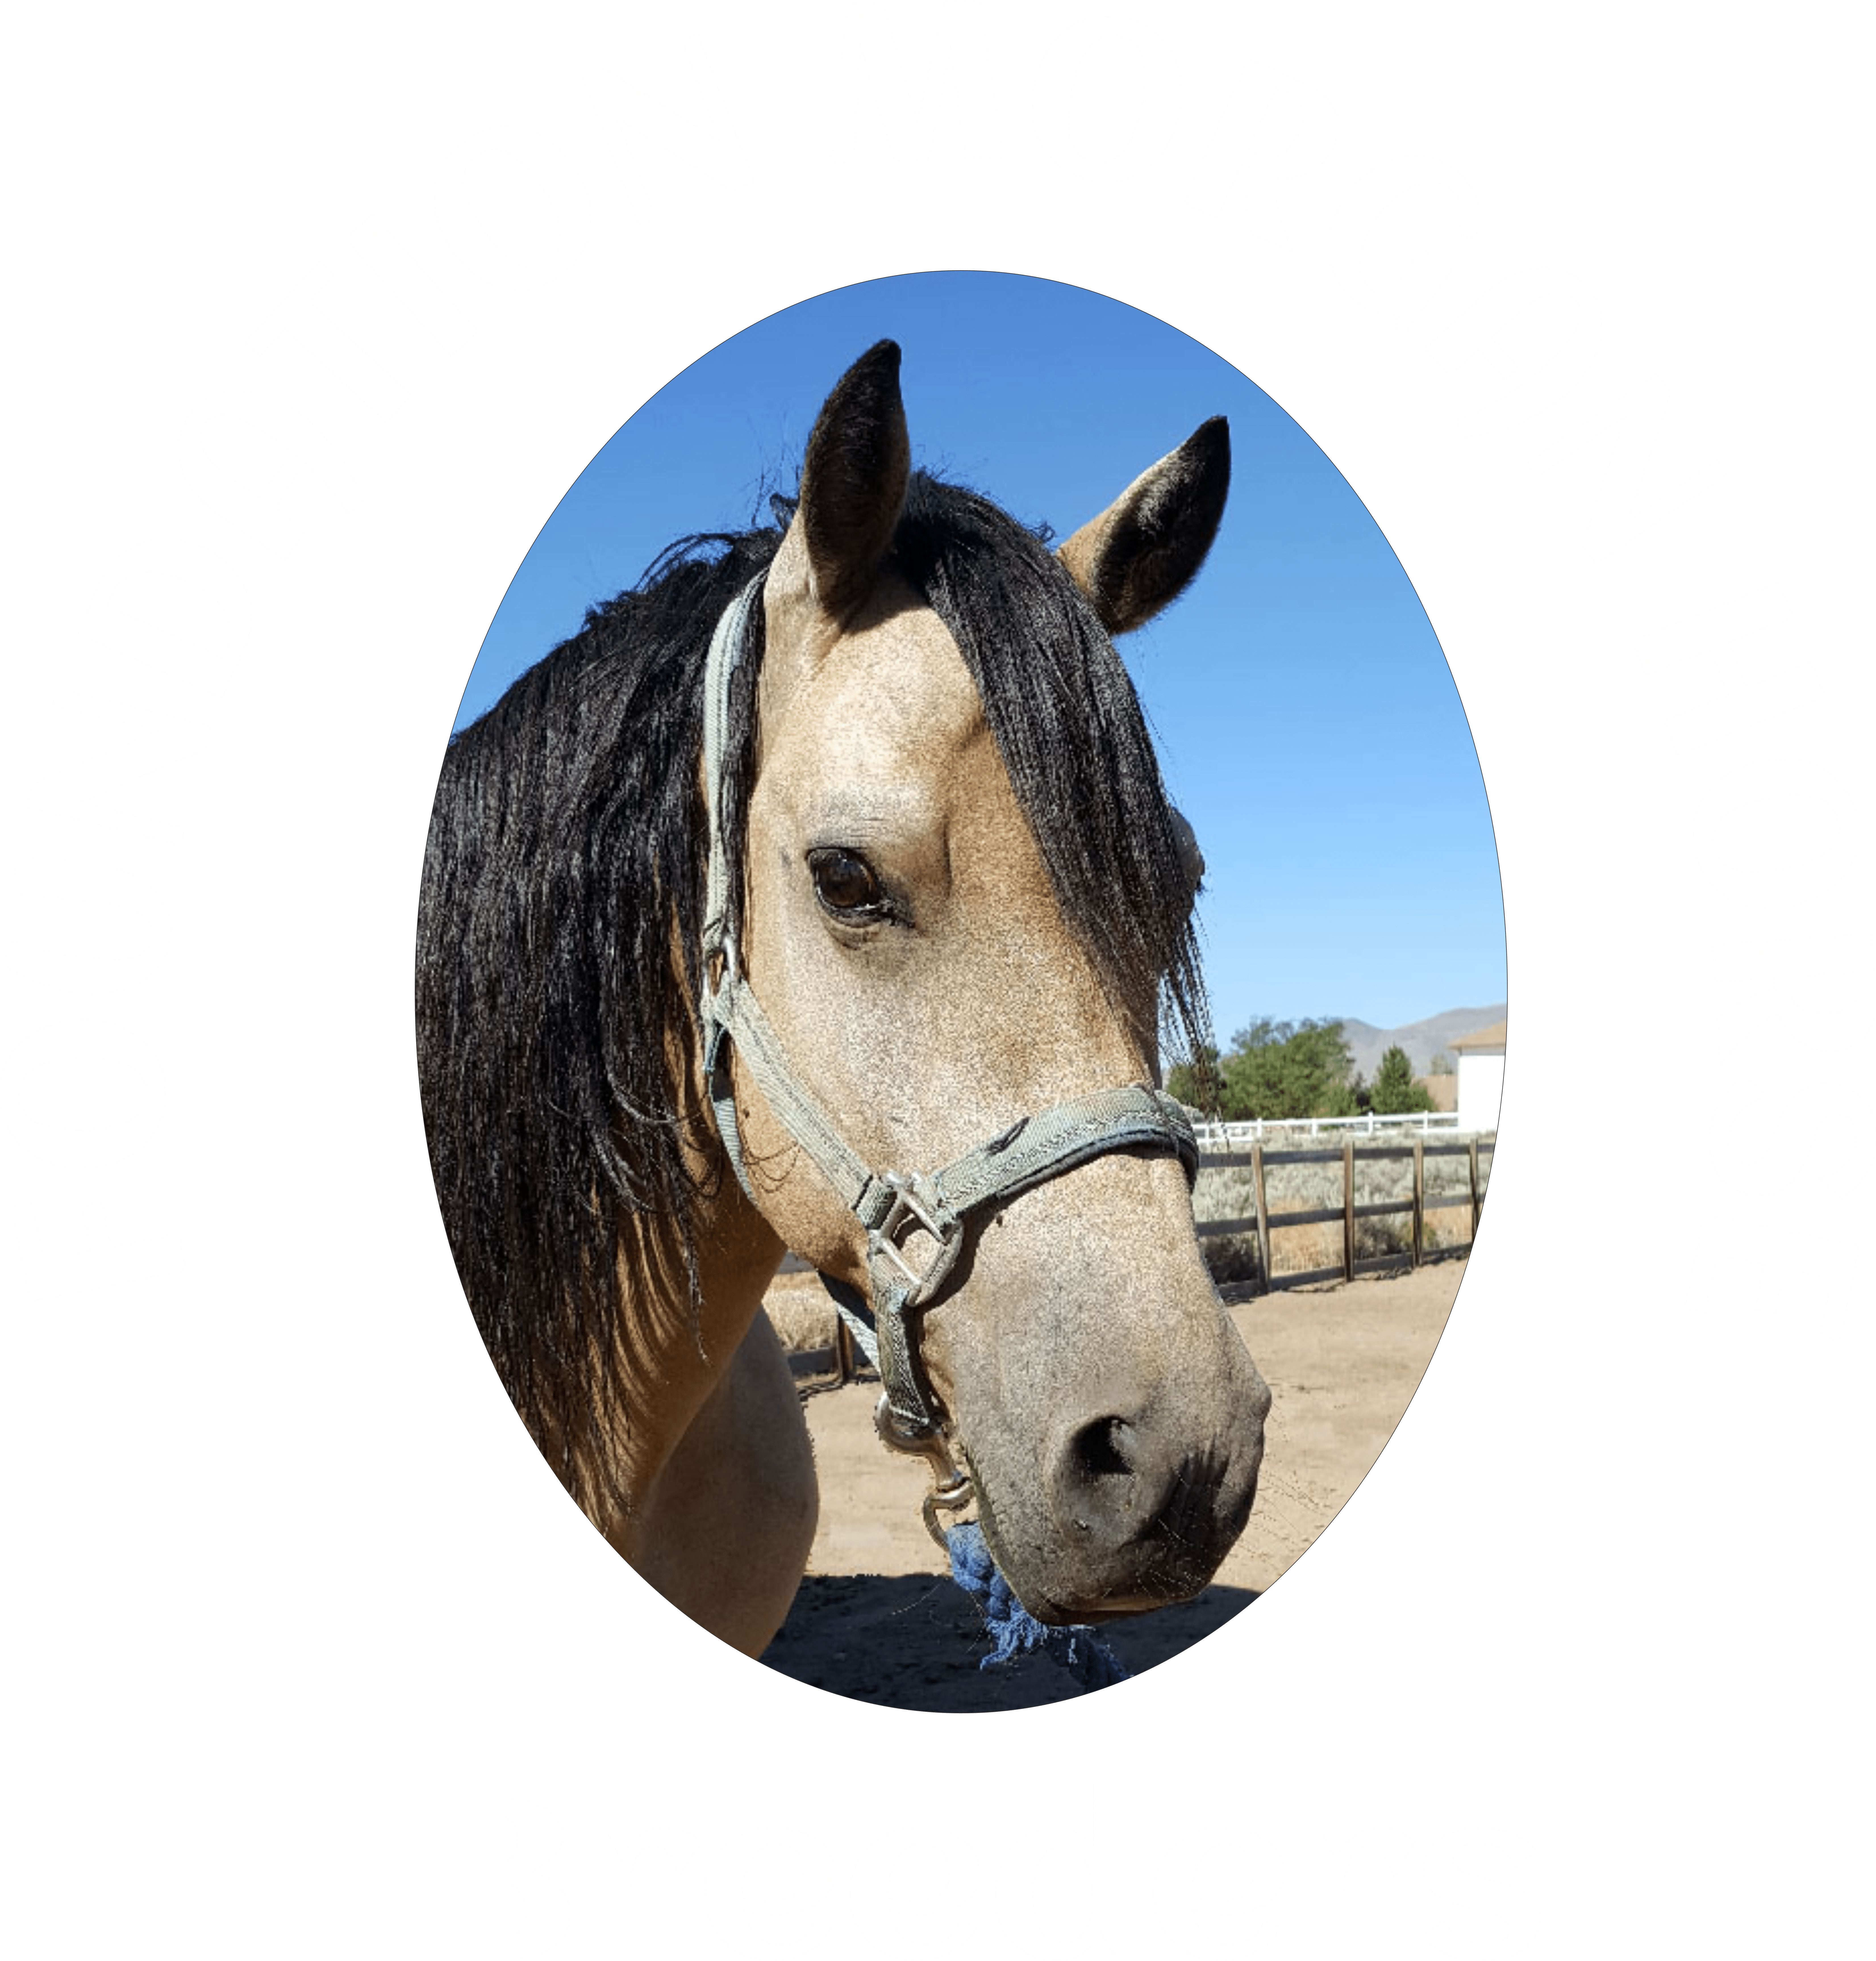 foundation morgan breeders horse logo